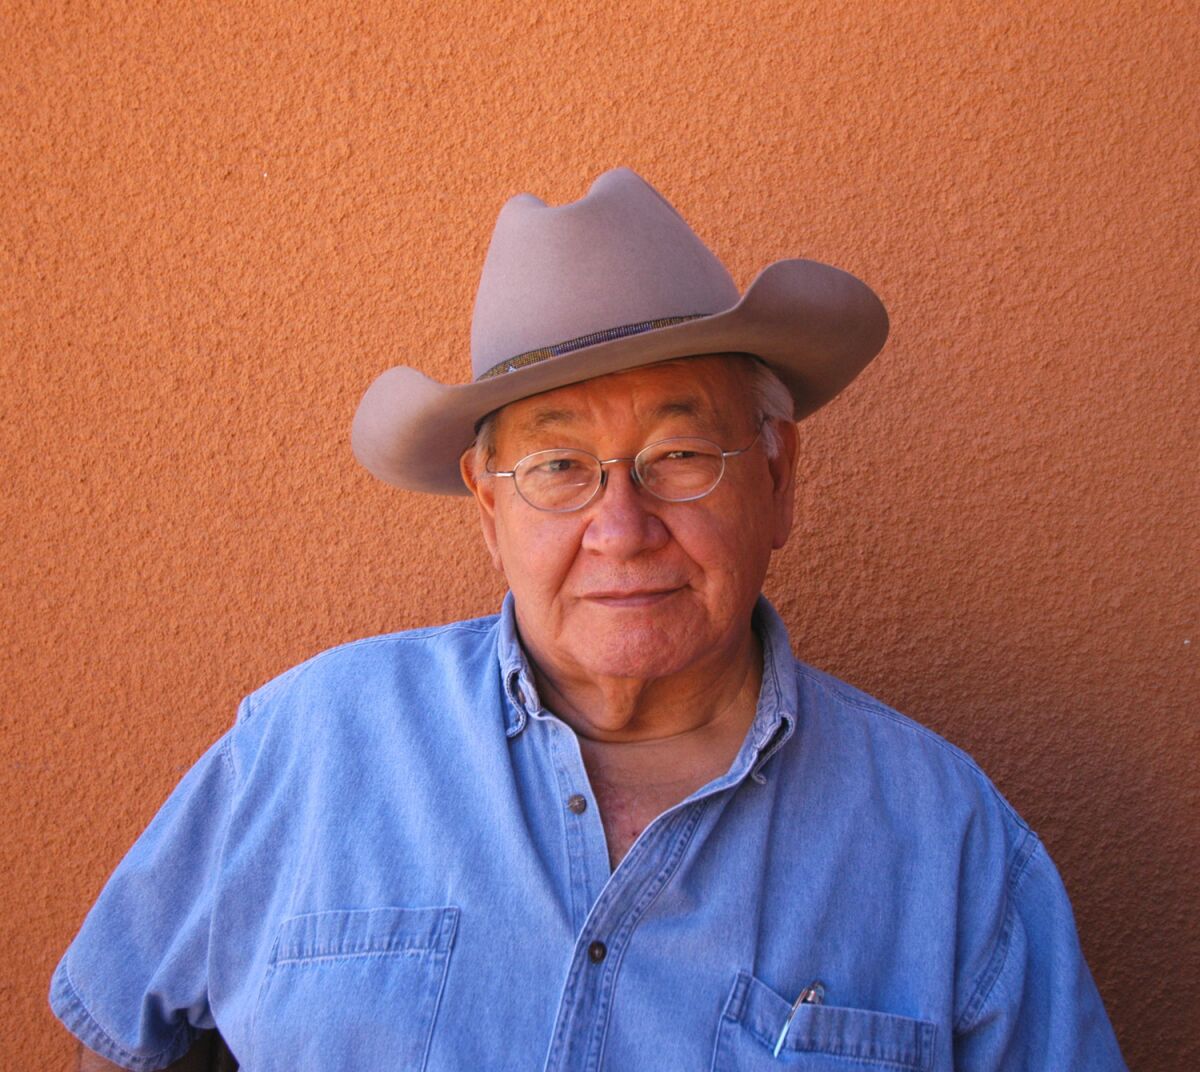 Author N. Scott Momaday